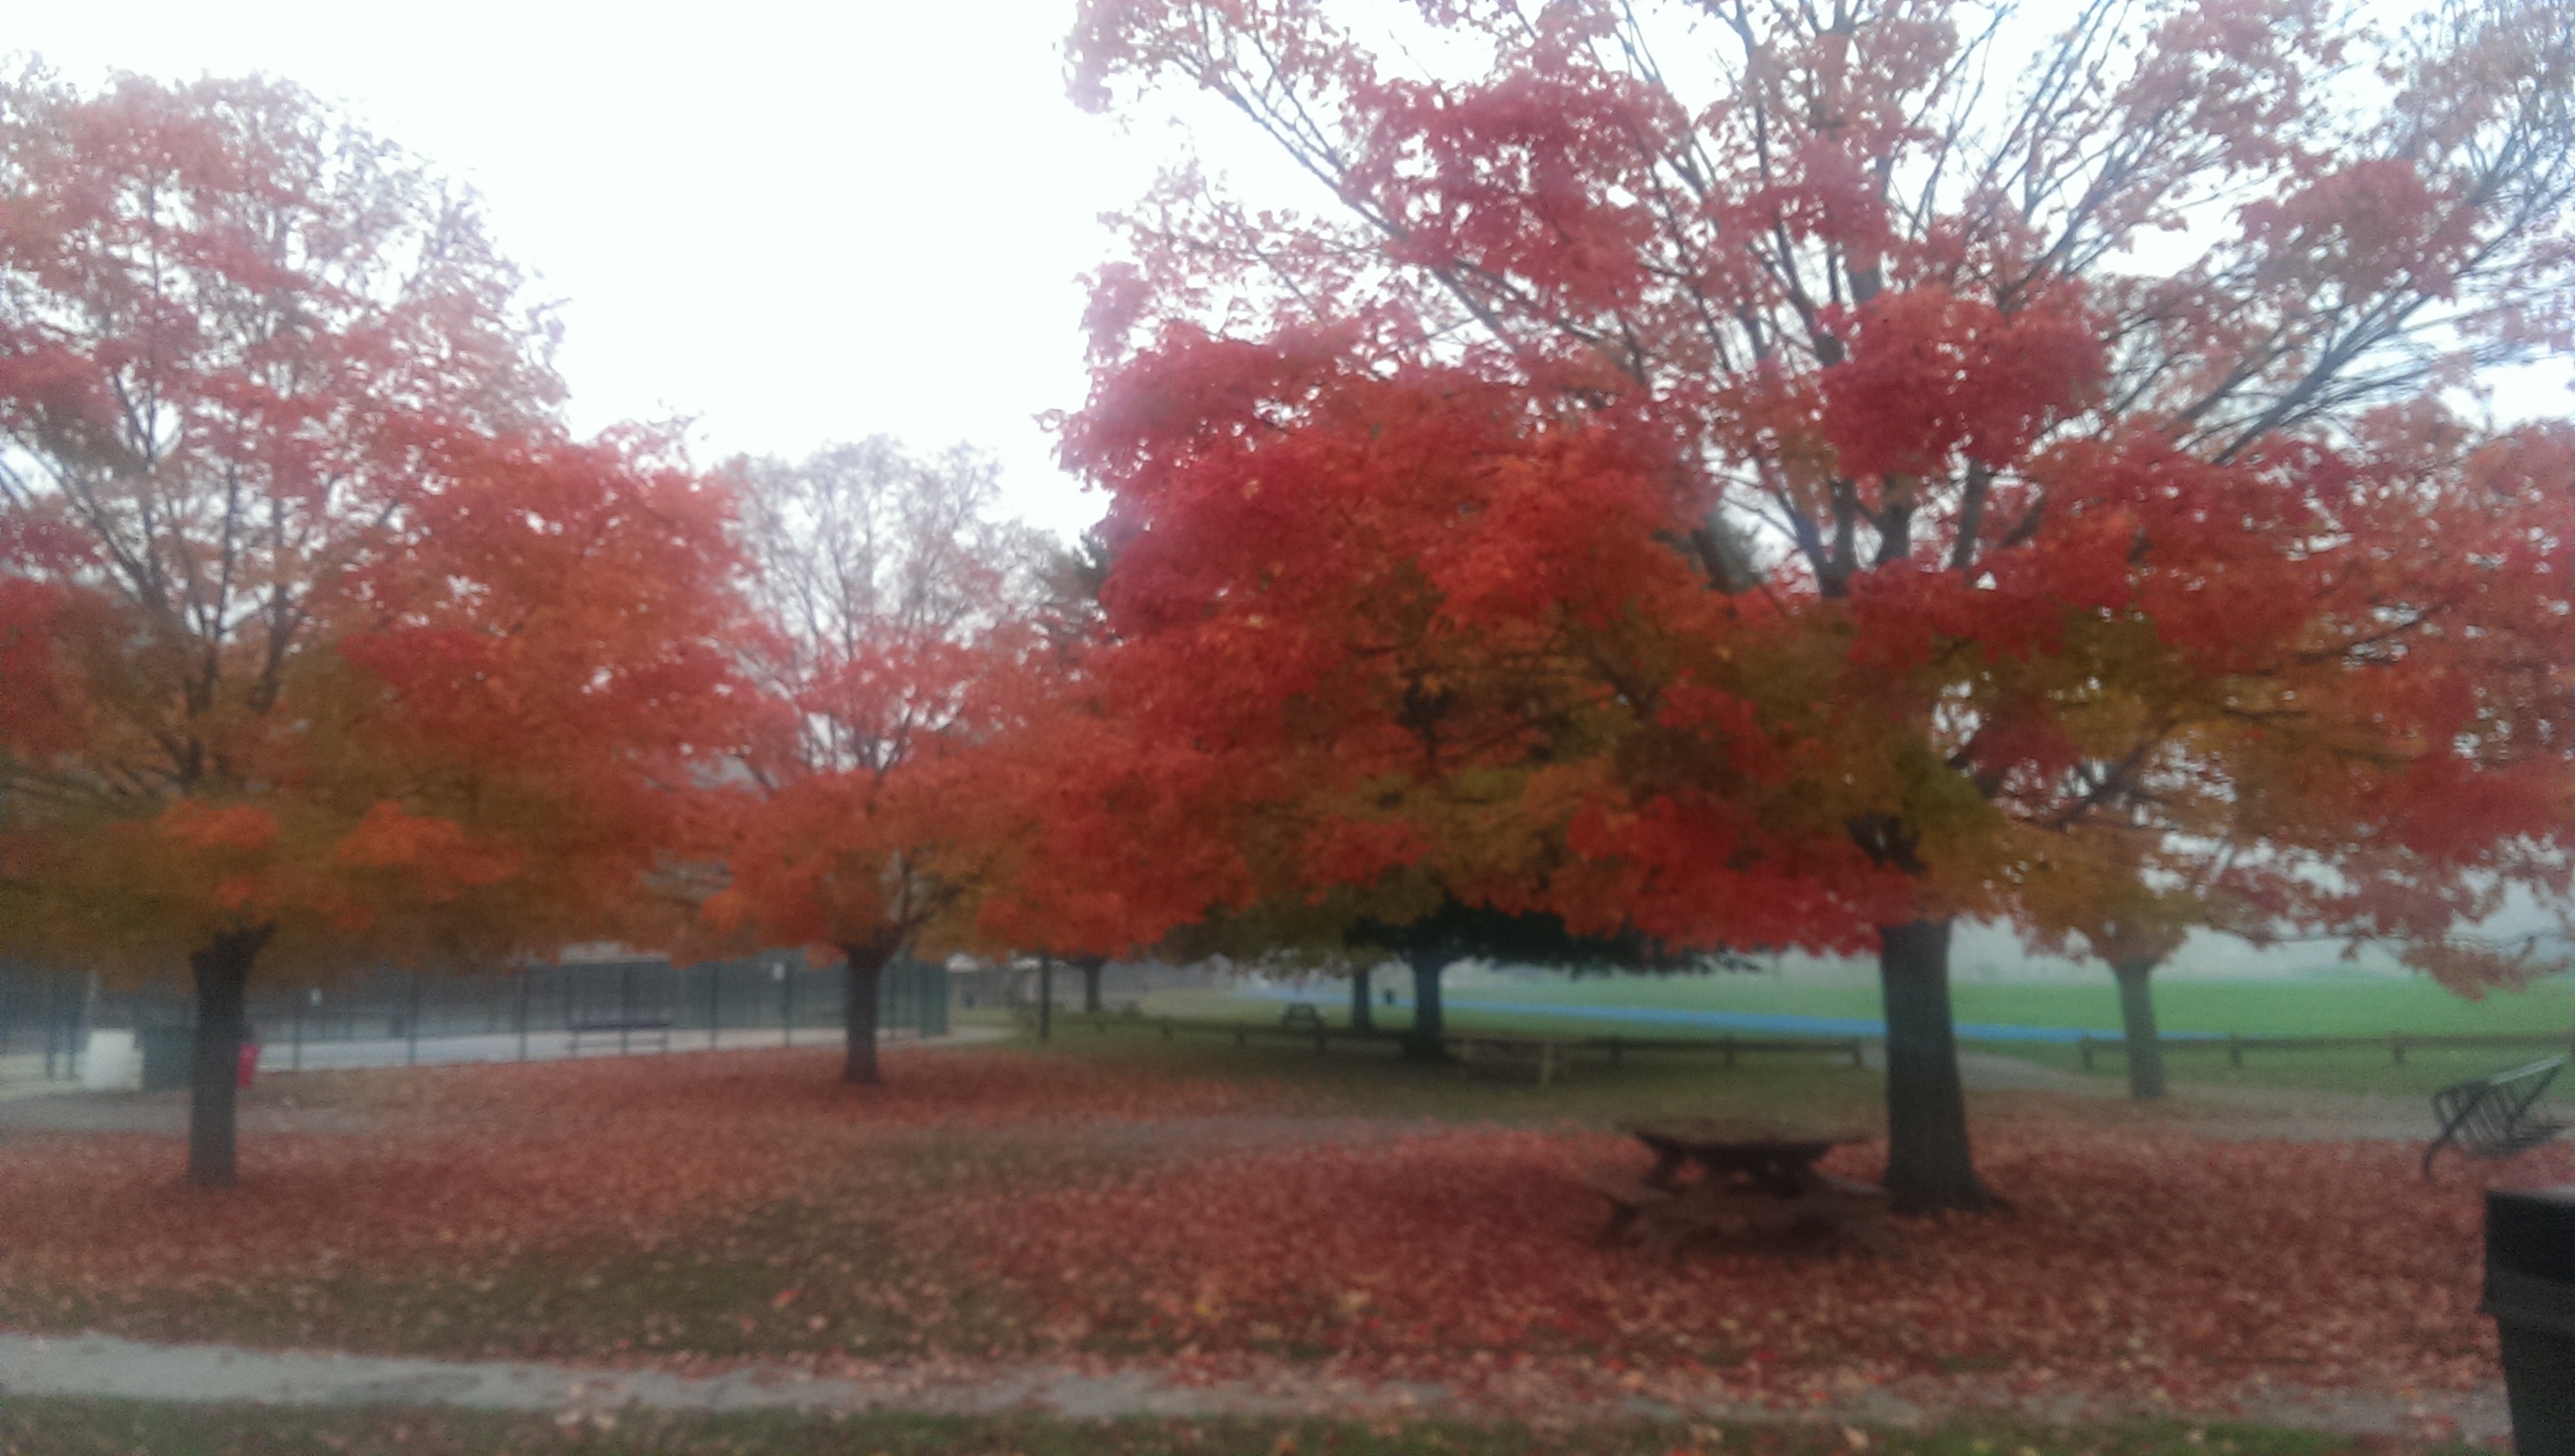 Fall trees